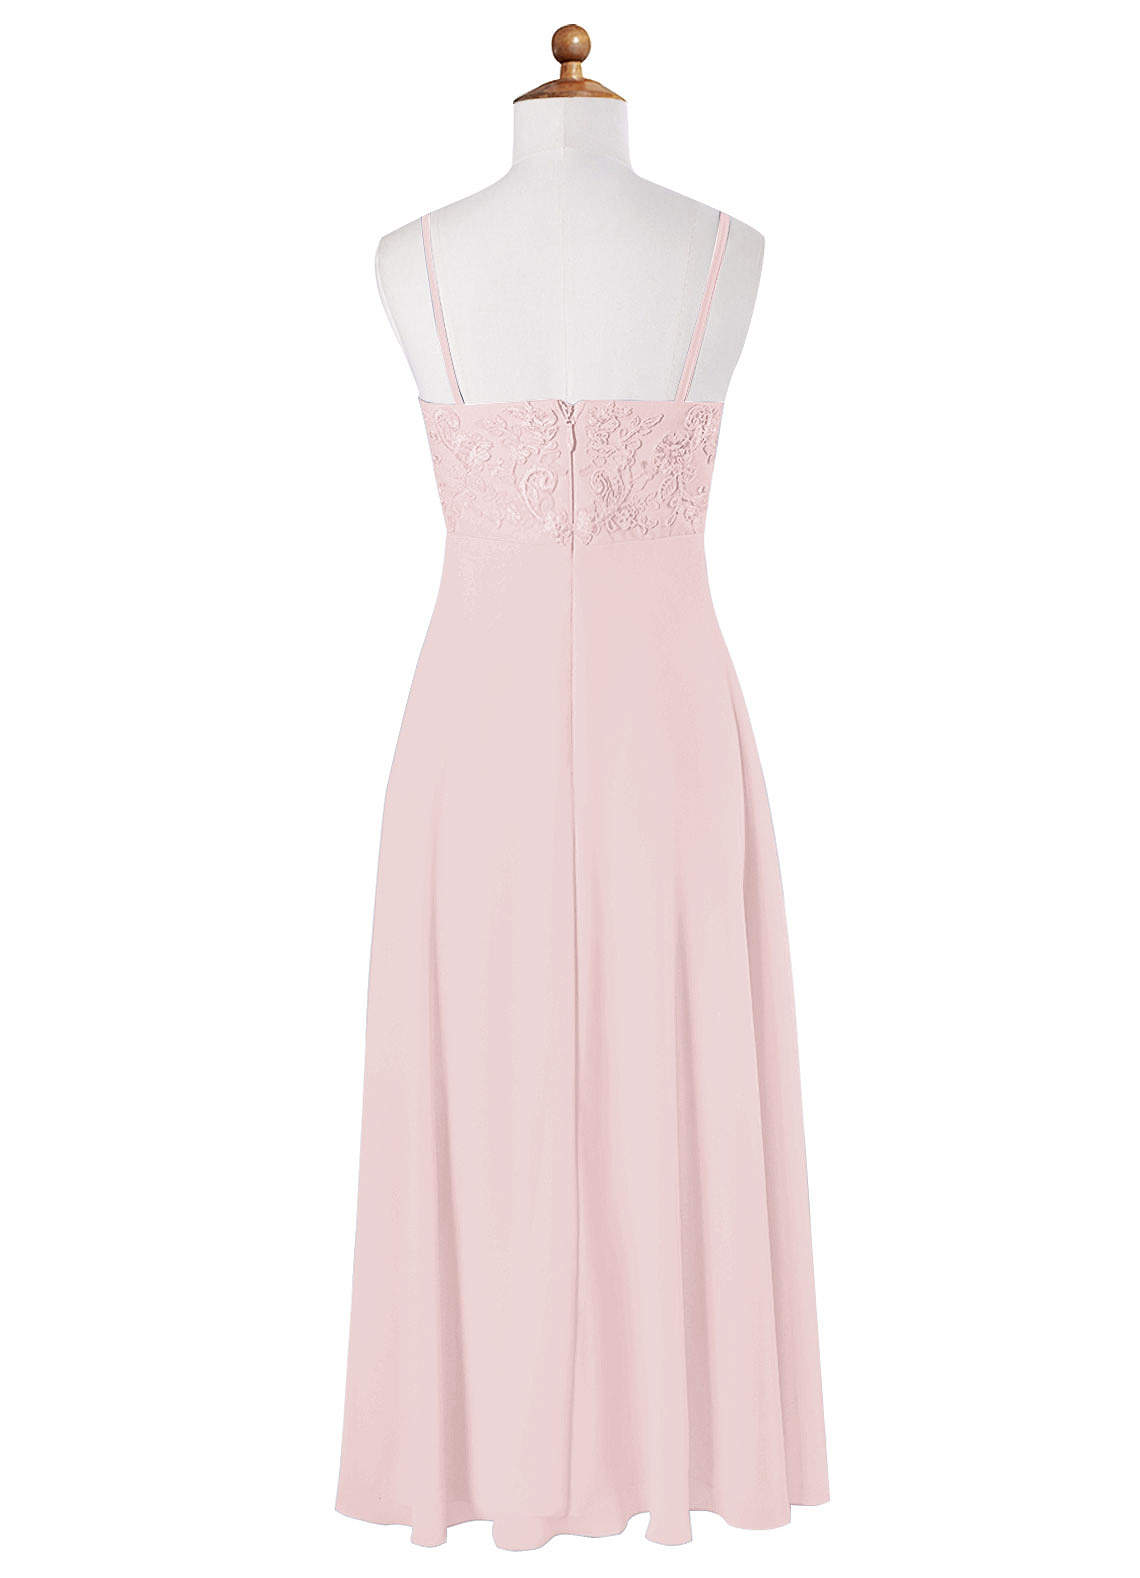 Azazie Sonya A-Line Lace Chiffon Floor-Length Junior Bridesmaid Dress image1